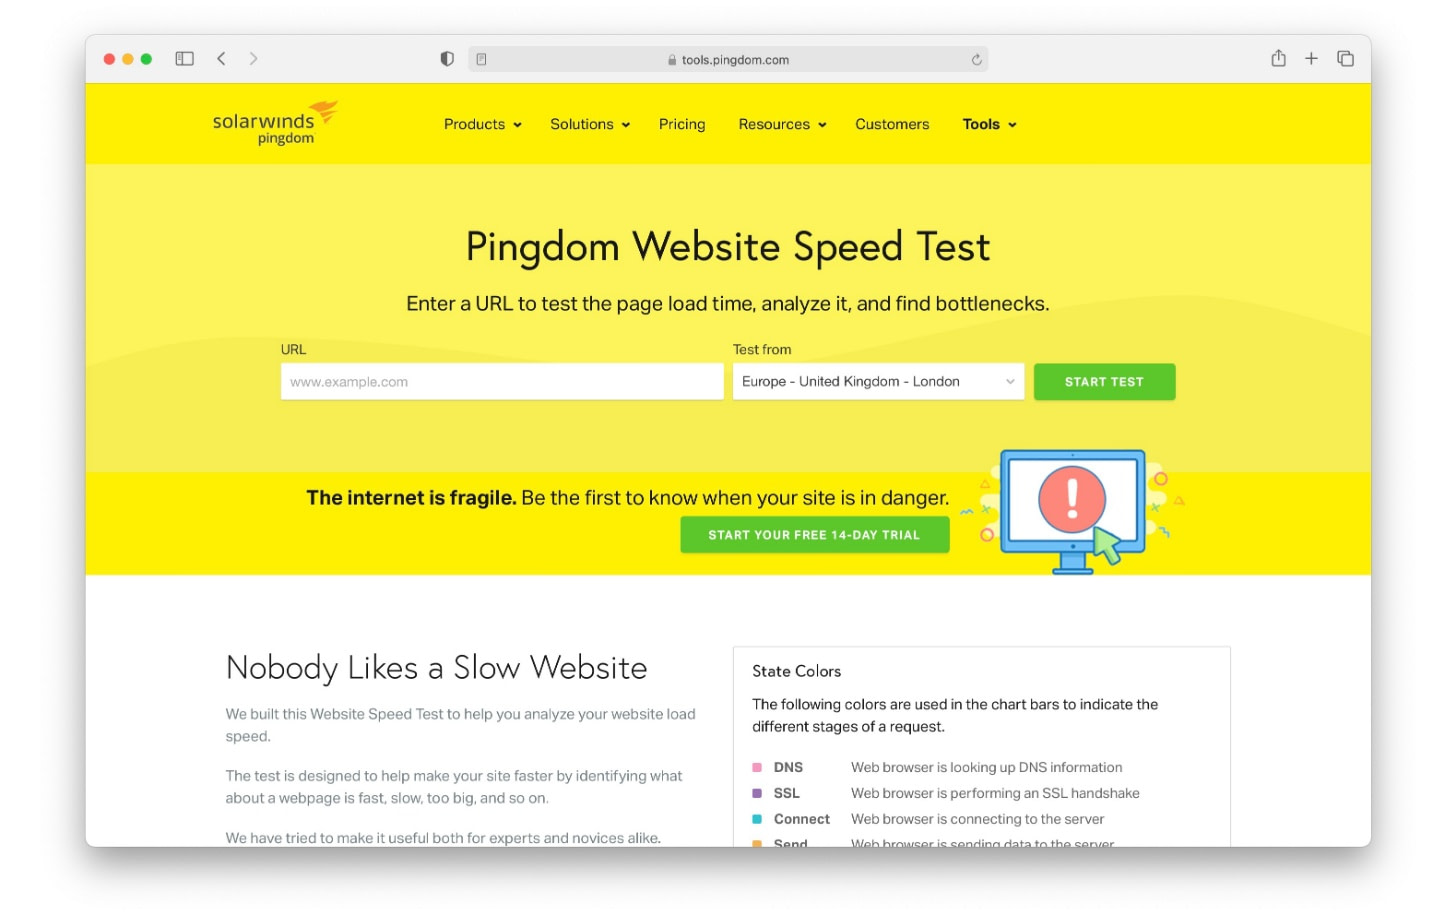 SEO tools like Pingdom make website analysis easy